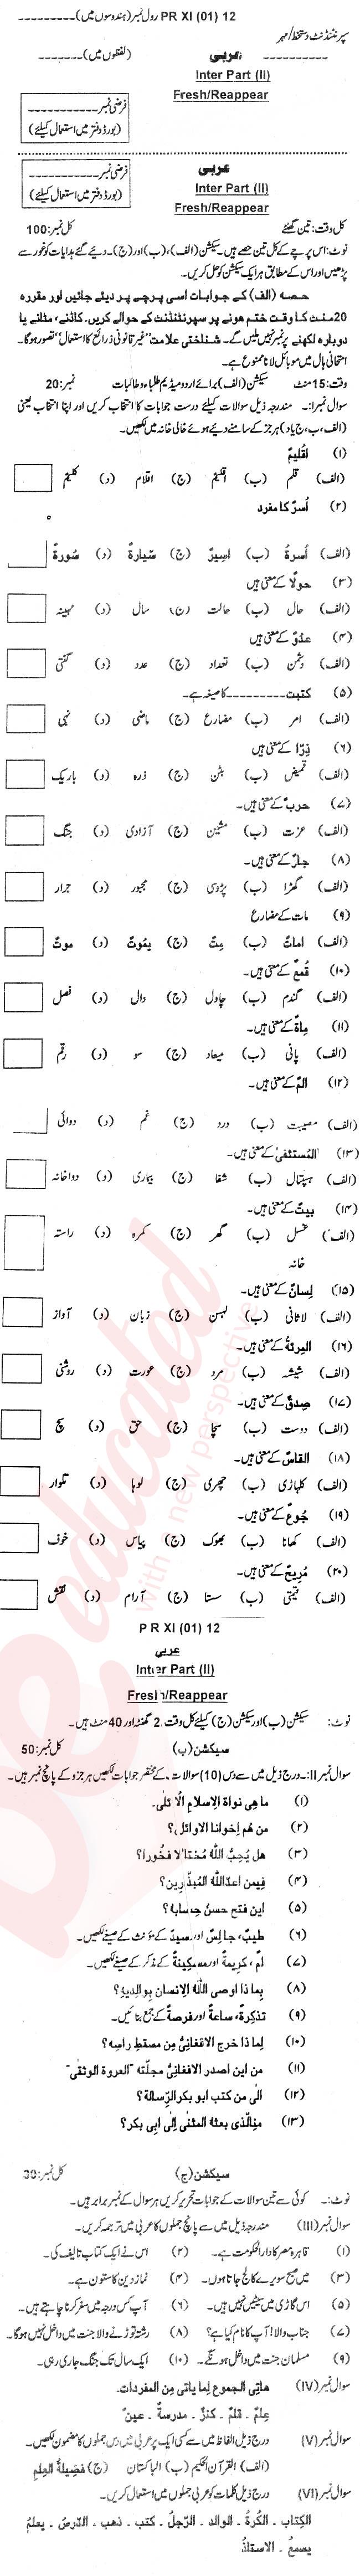 Arabic FA Part 2 Past Paper Group 1 BISE Mardan 2012